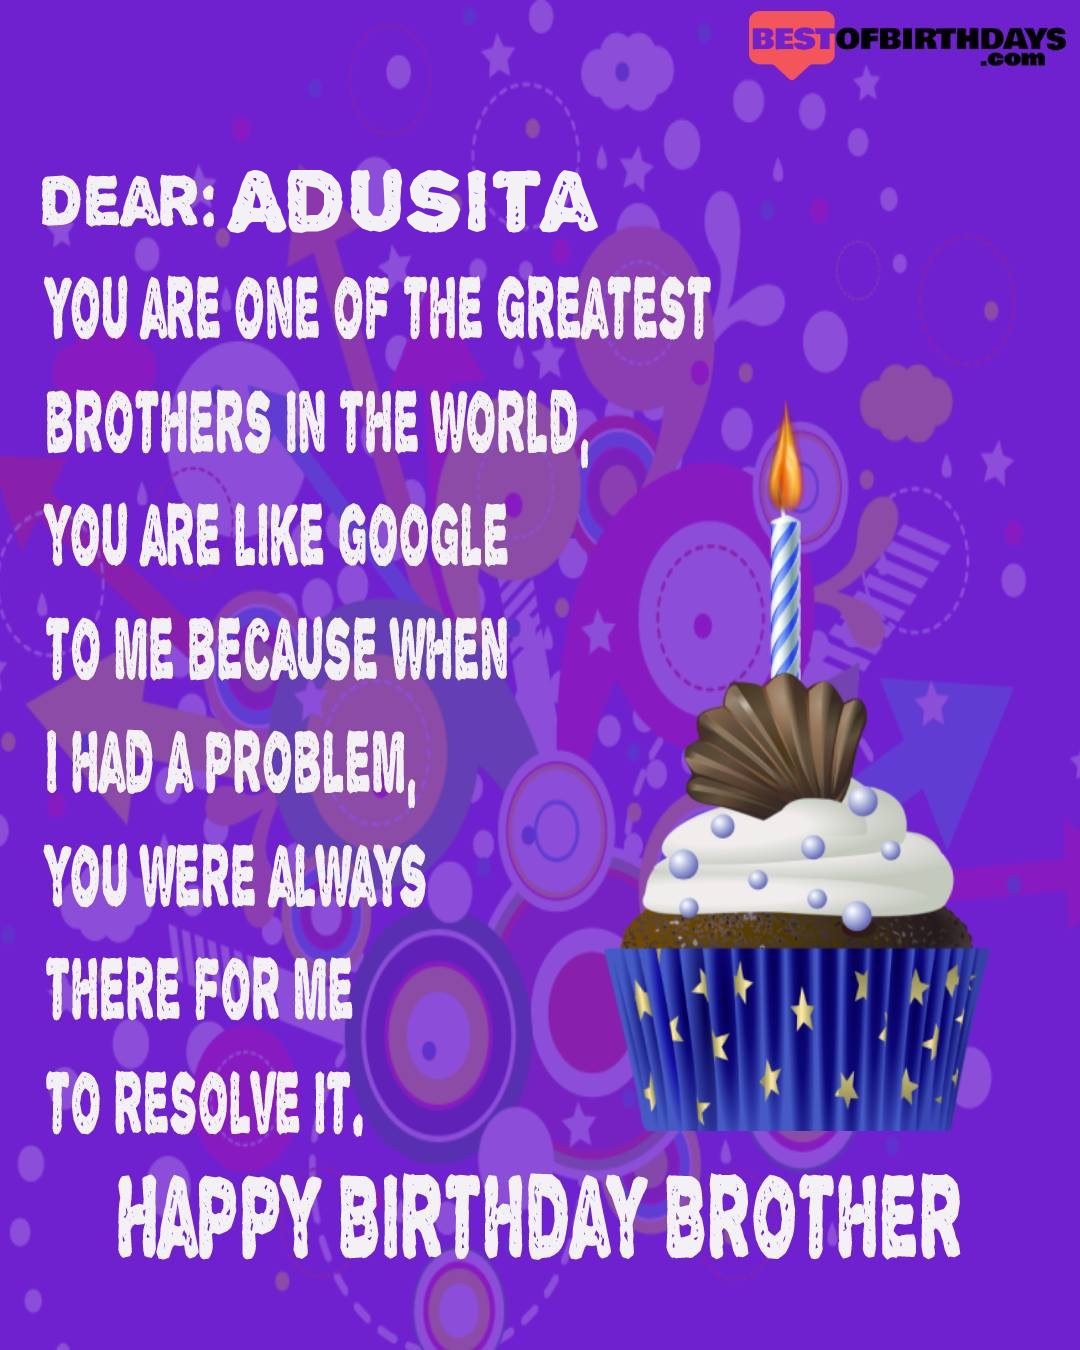 Happy birthday adusita bhai brother bro